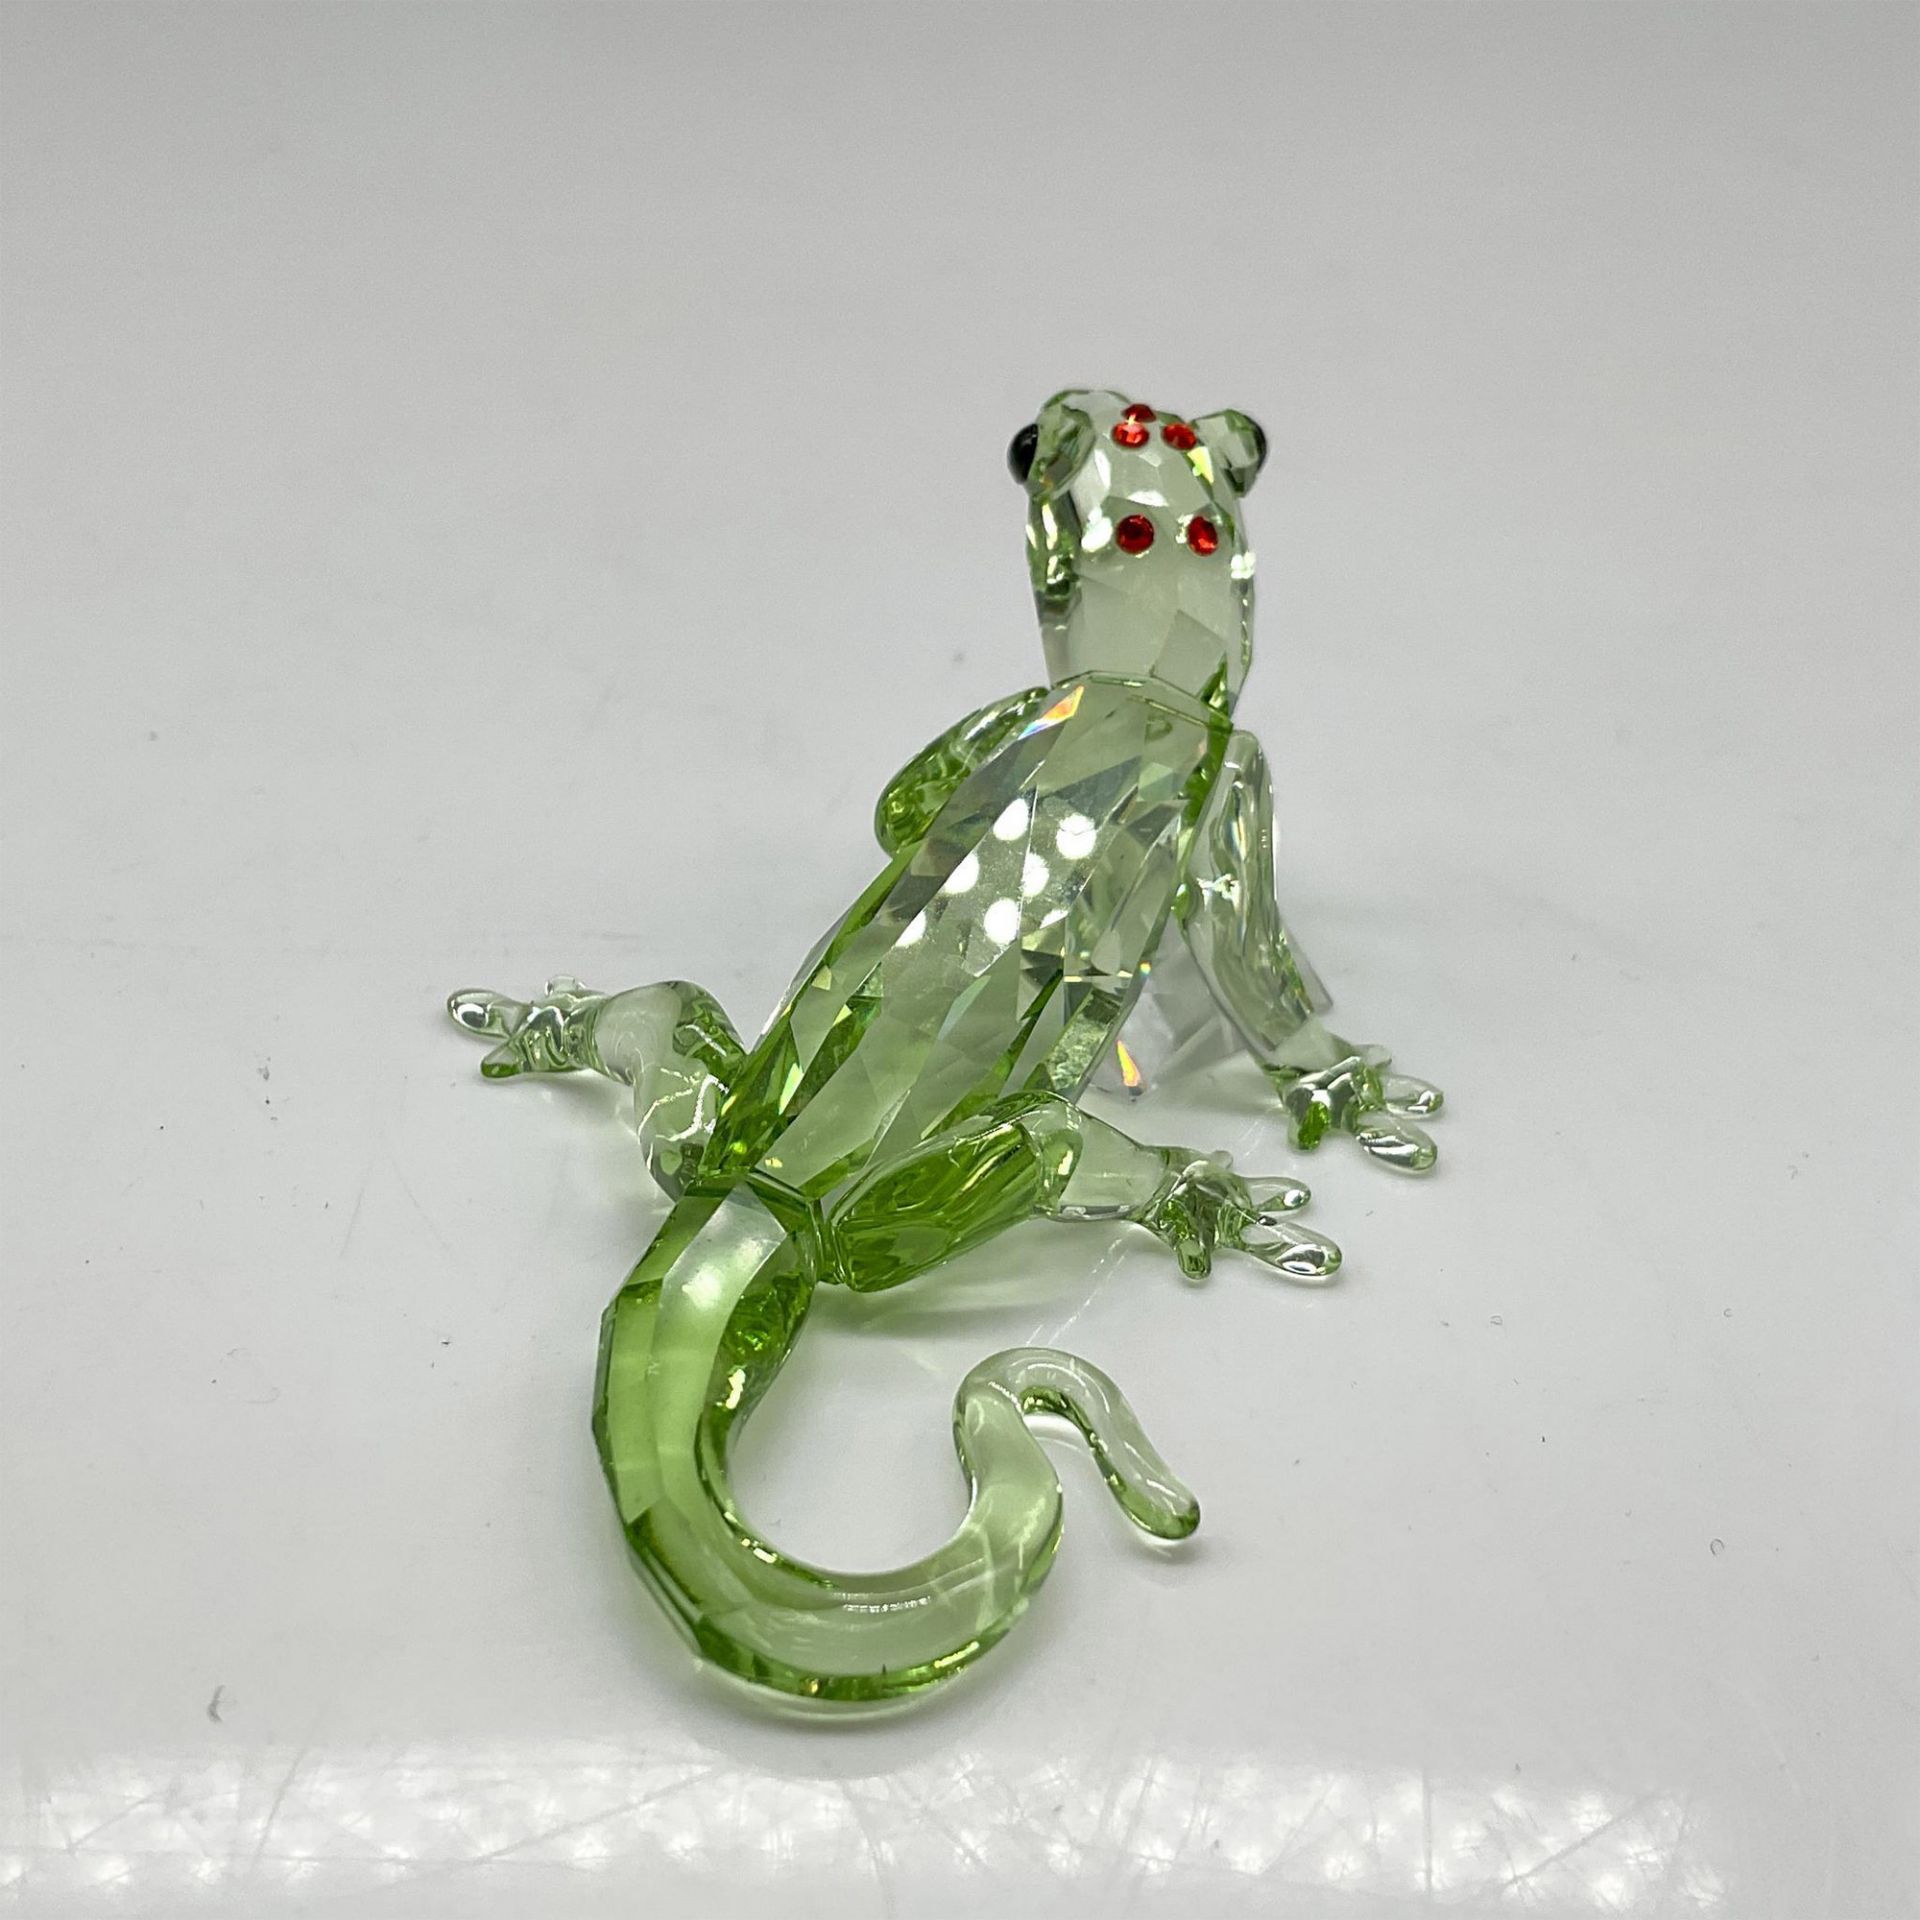 Swarovski Silver Crystal Figurine, Gecko - Image 2 of 4